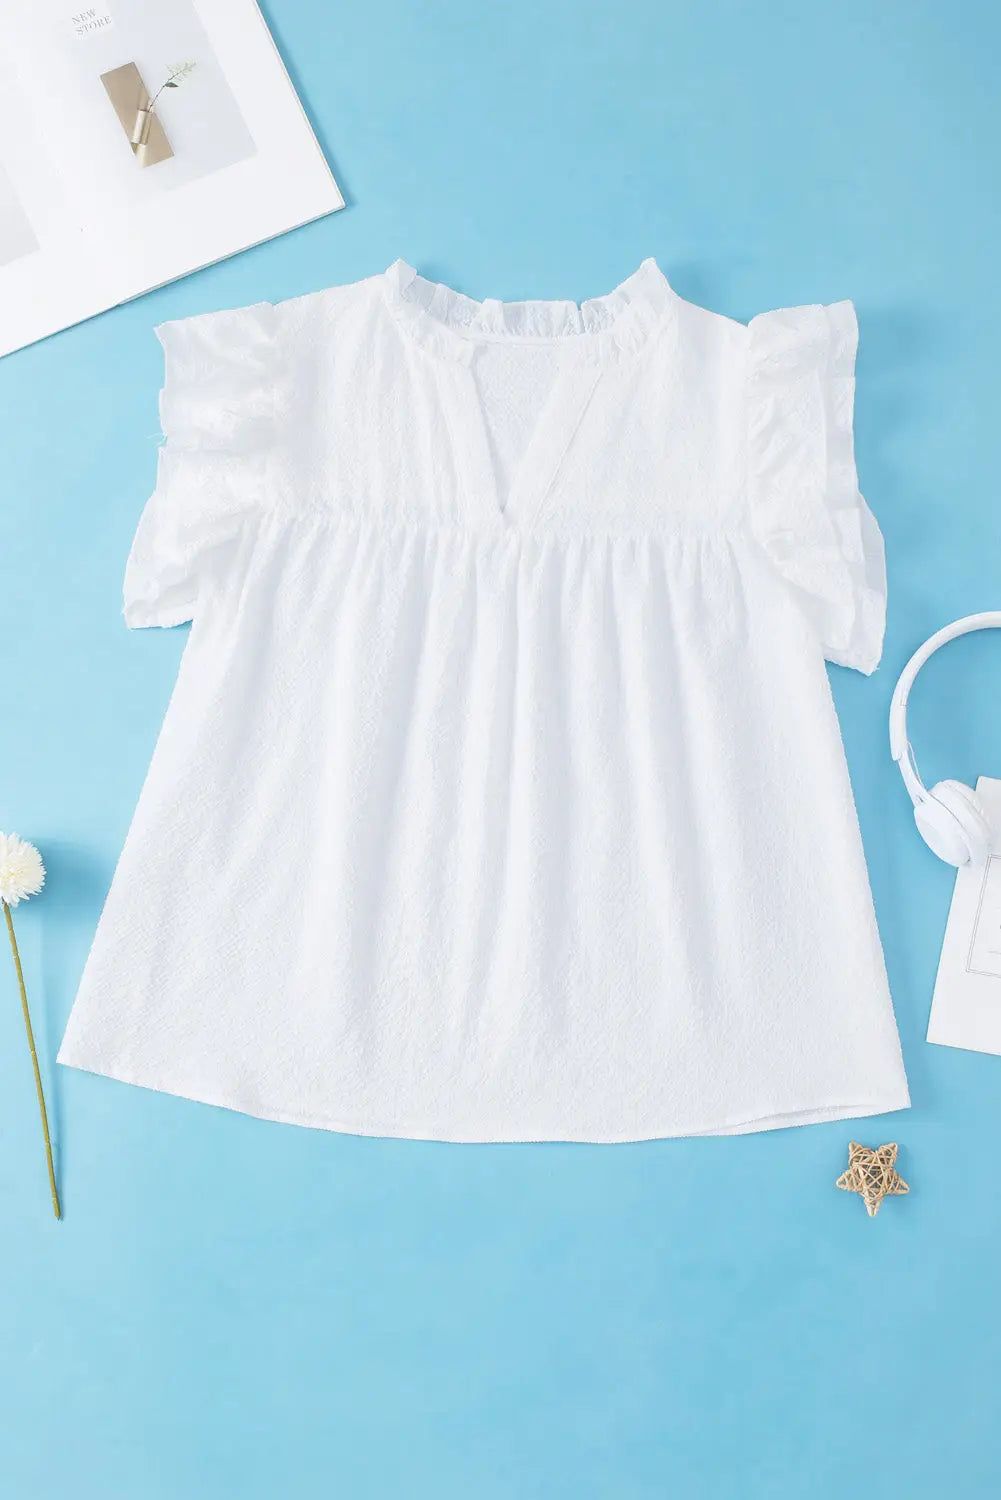 White flutter sleeve plus size blouse - blouses & shirts